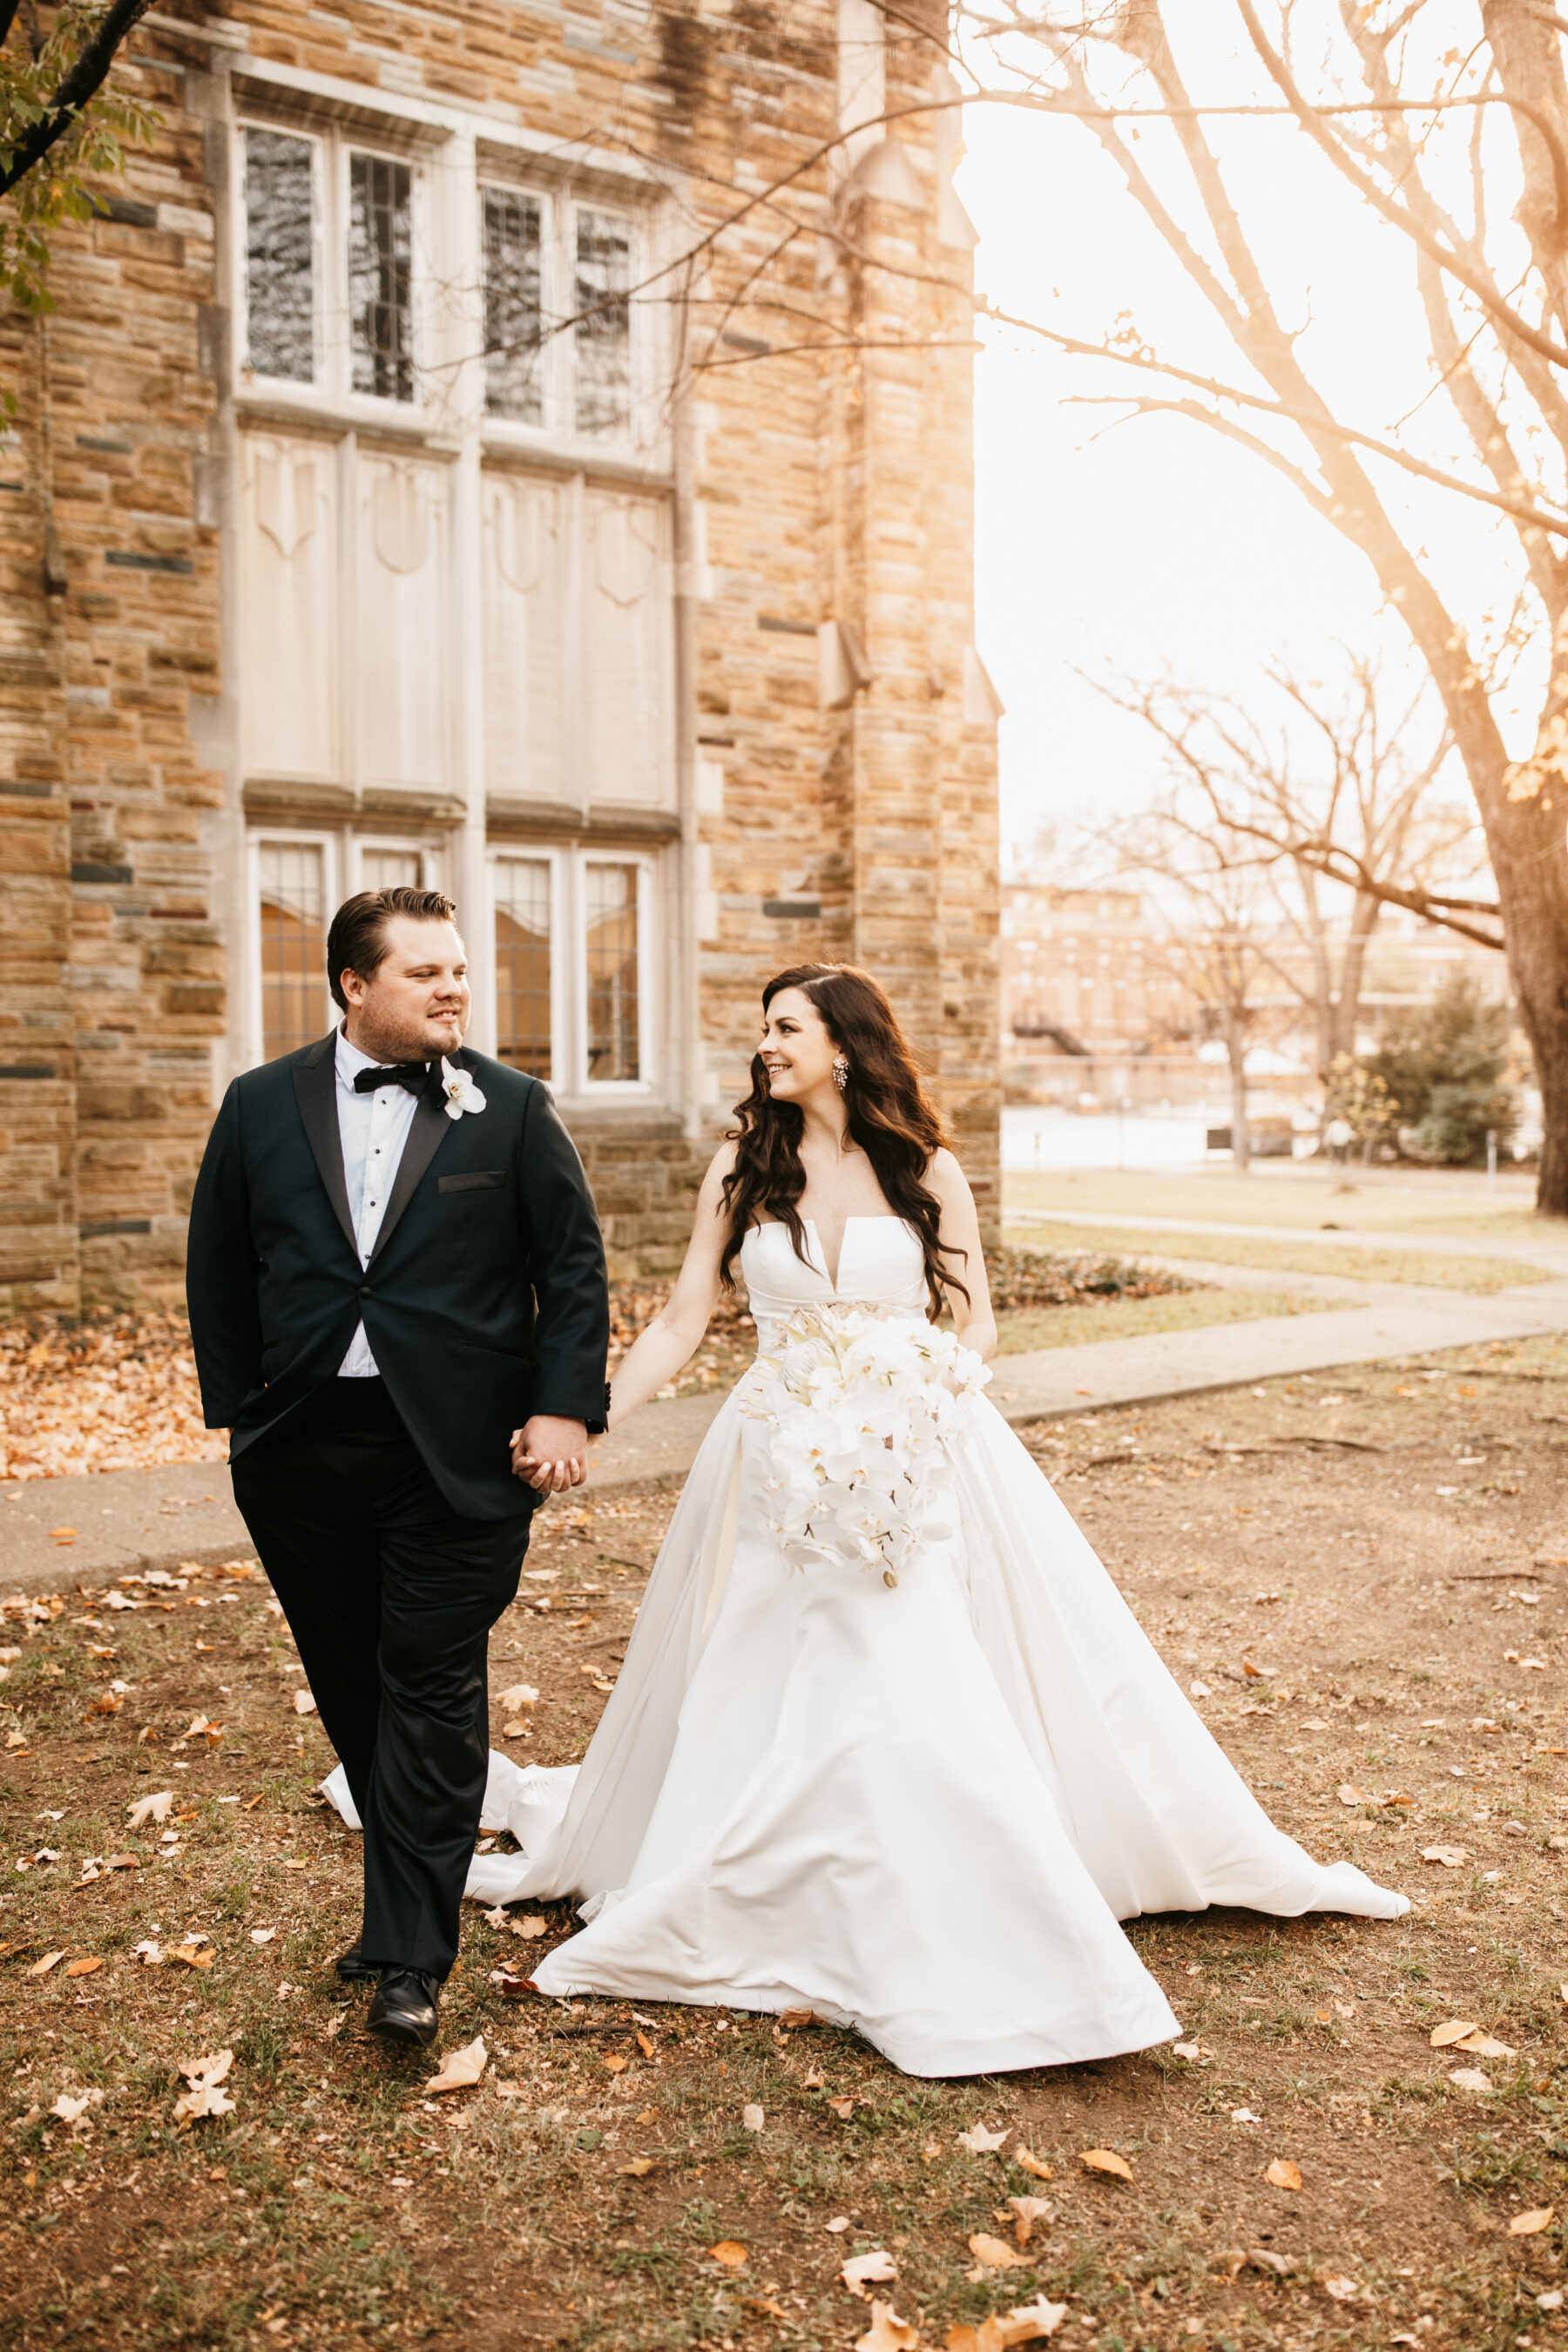 Modern wedding with statement flowers from LMA Designs | Nashville Bride Guide